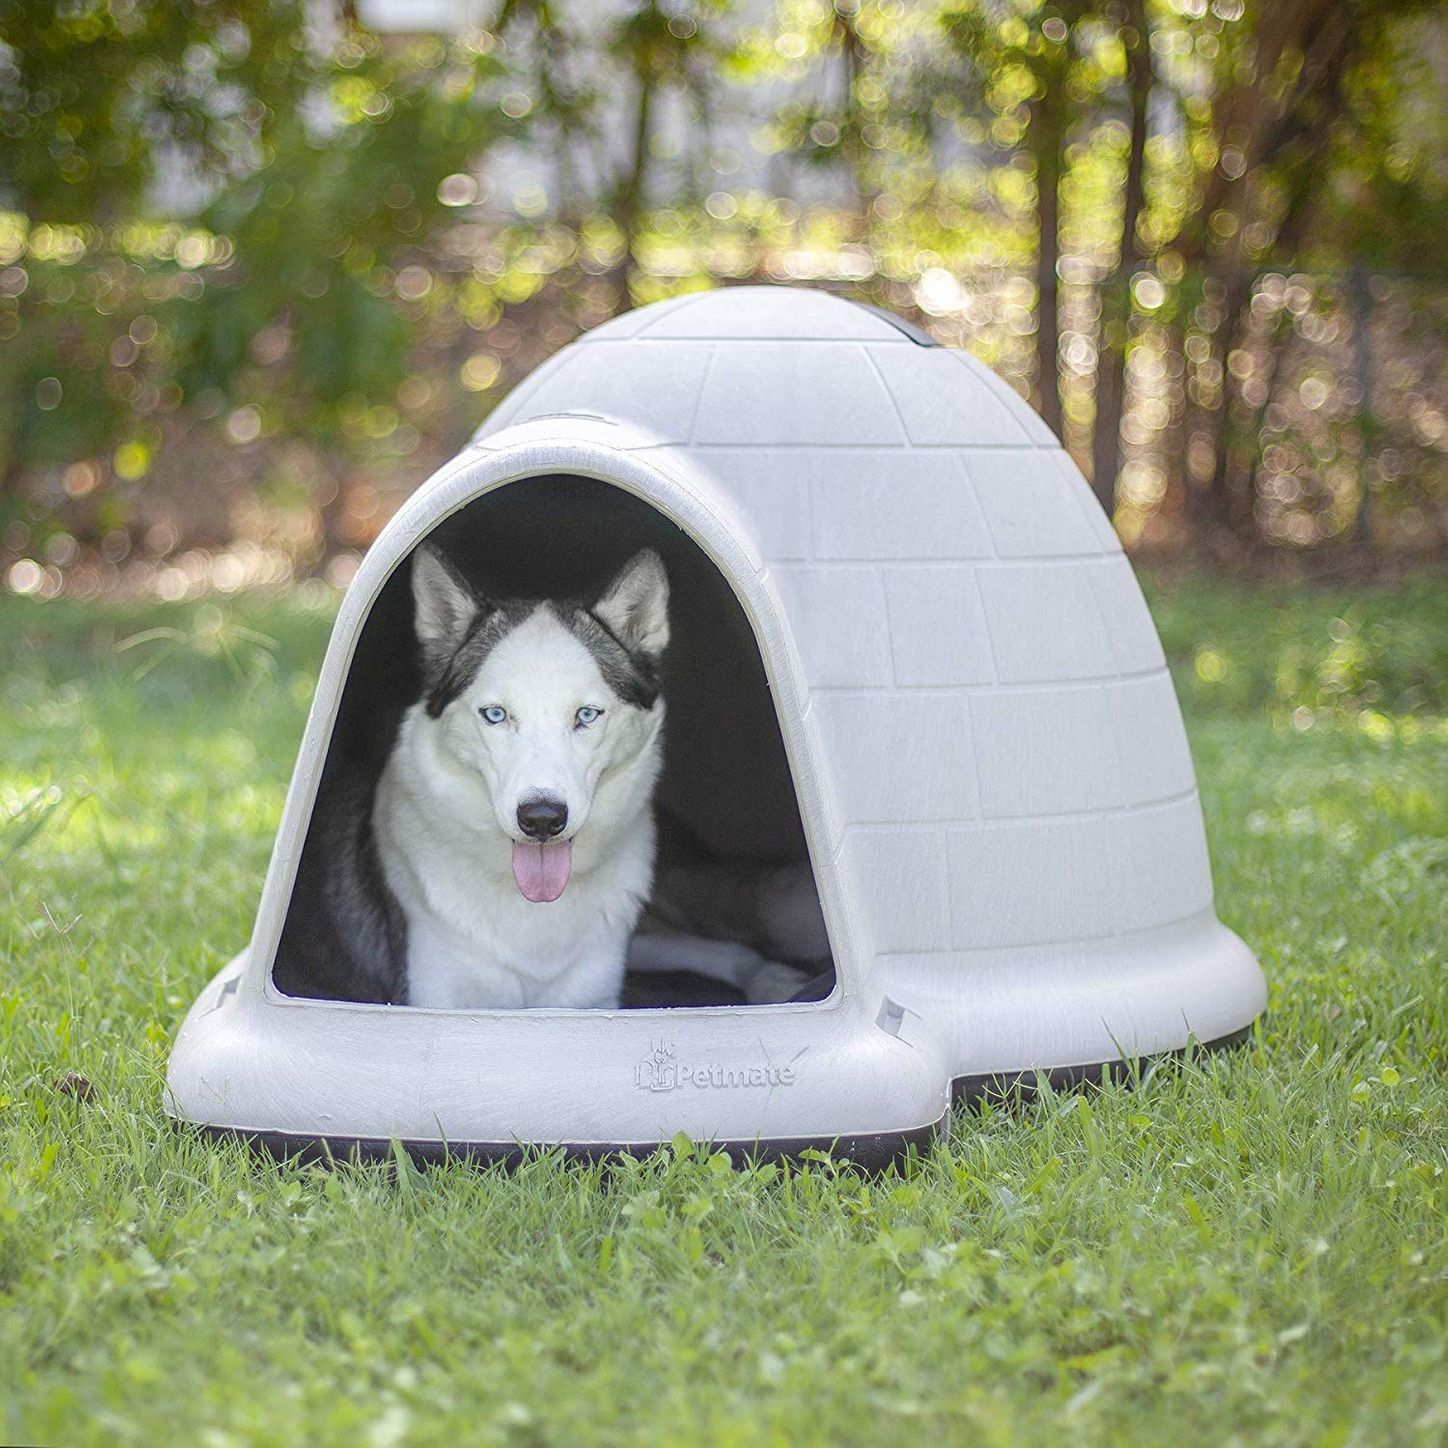 used igloo dog house